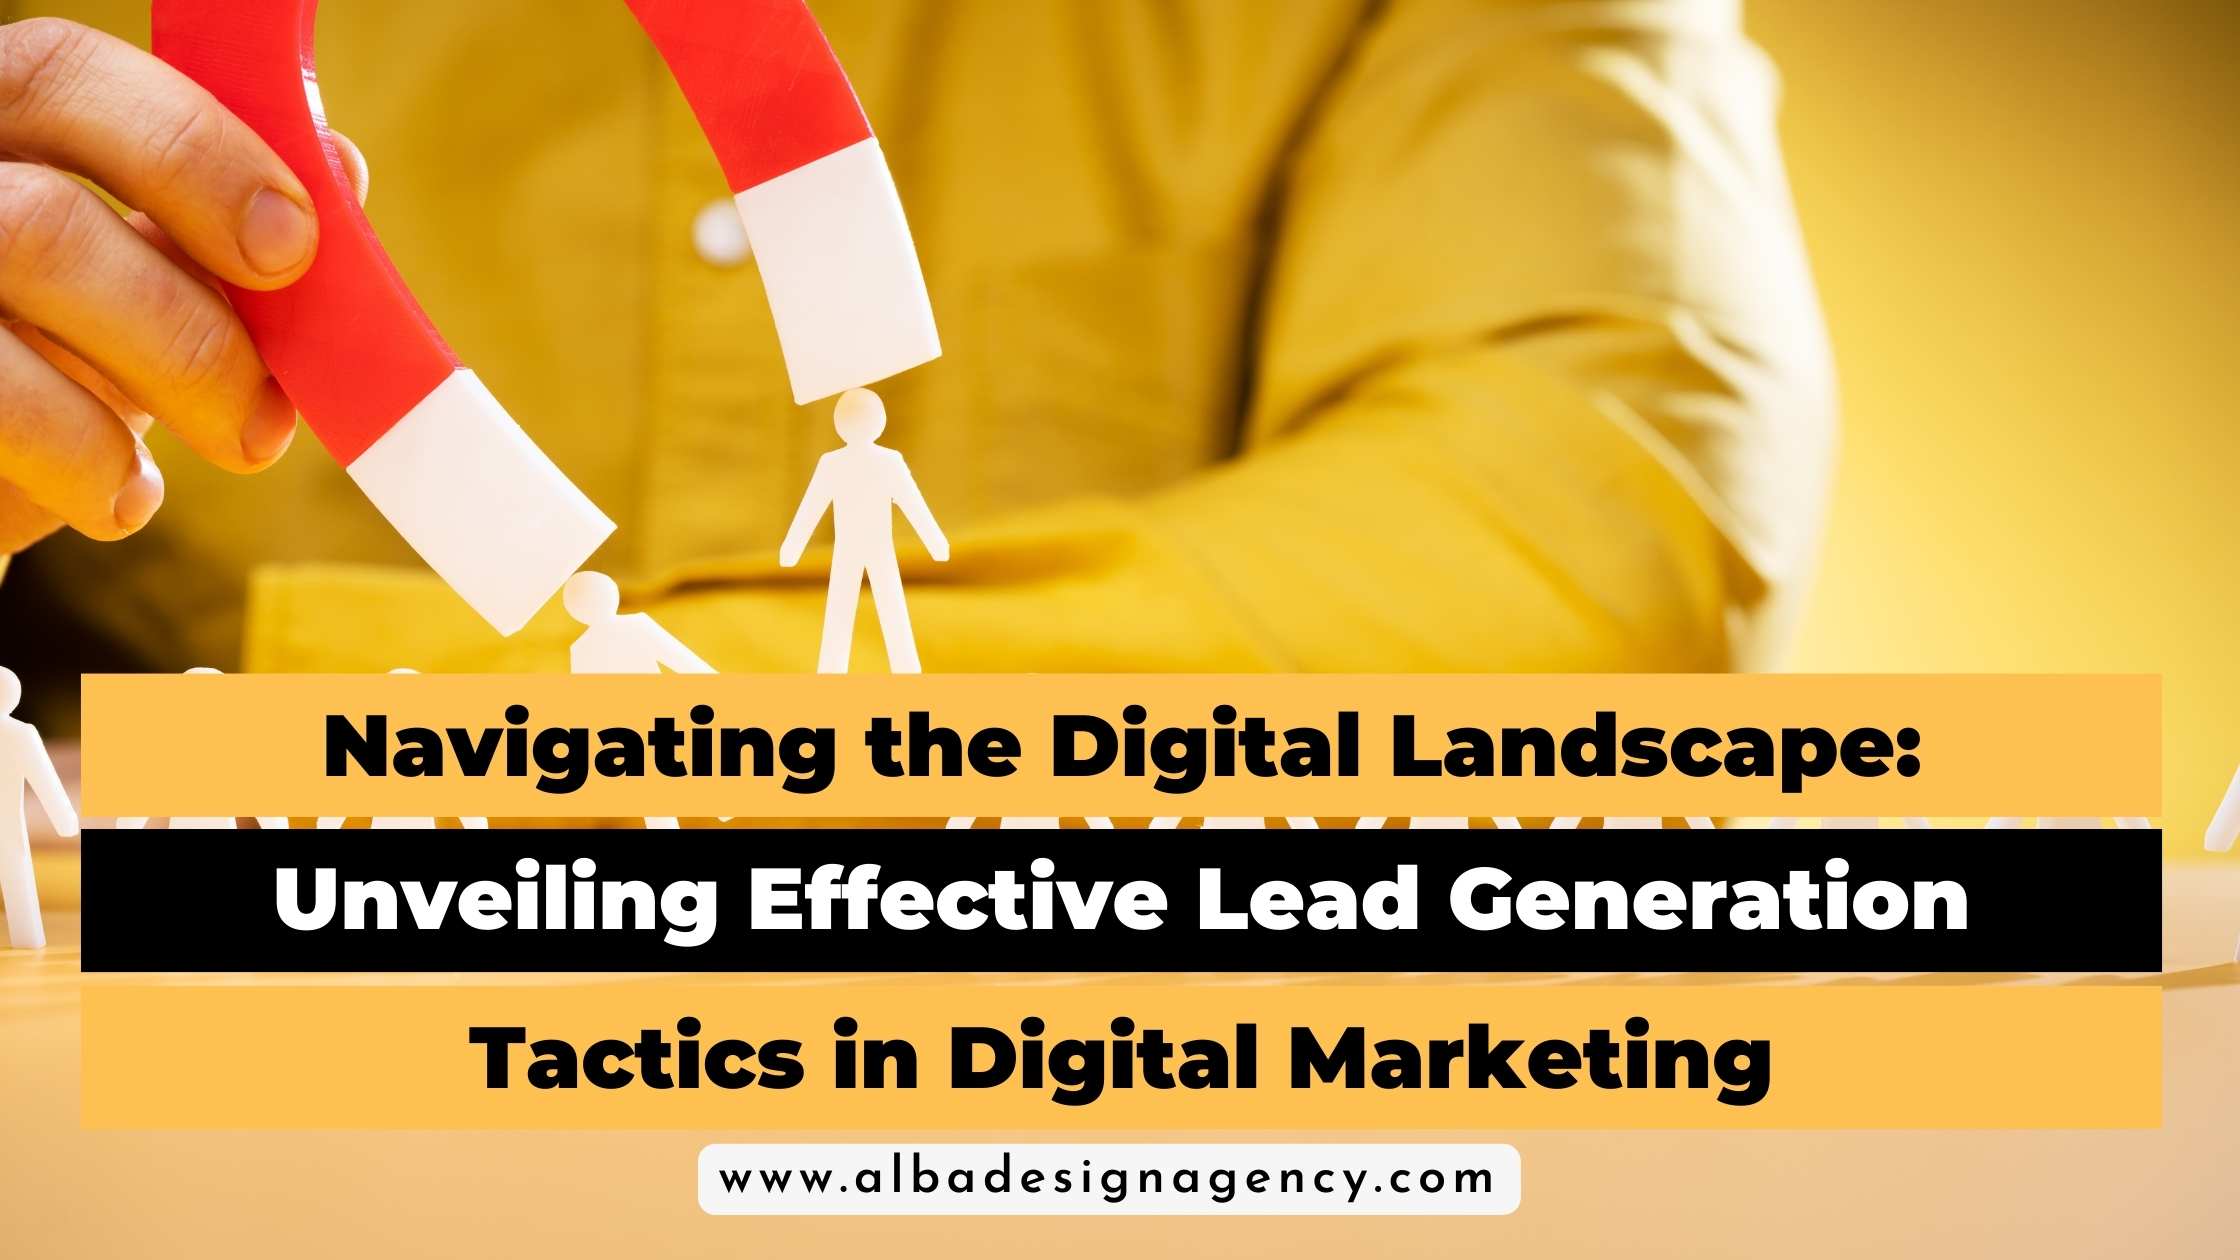 Lead Generation Tactics in Digital Marketing